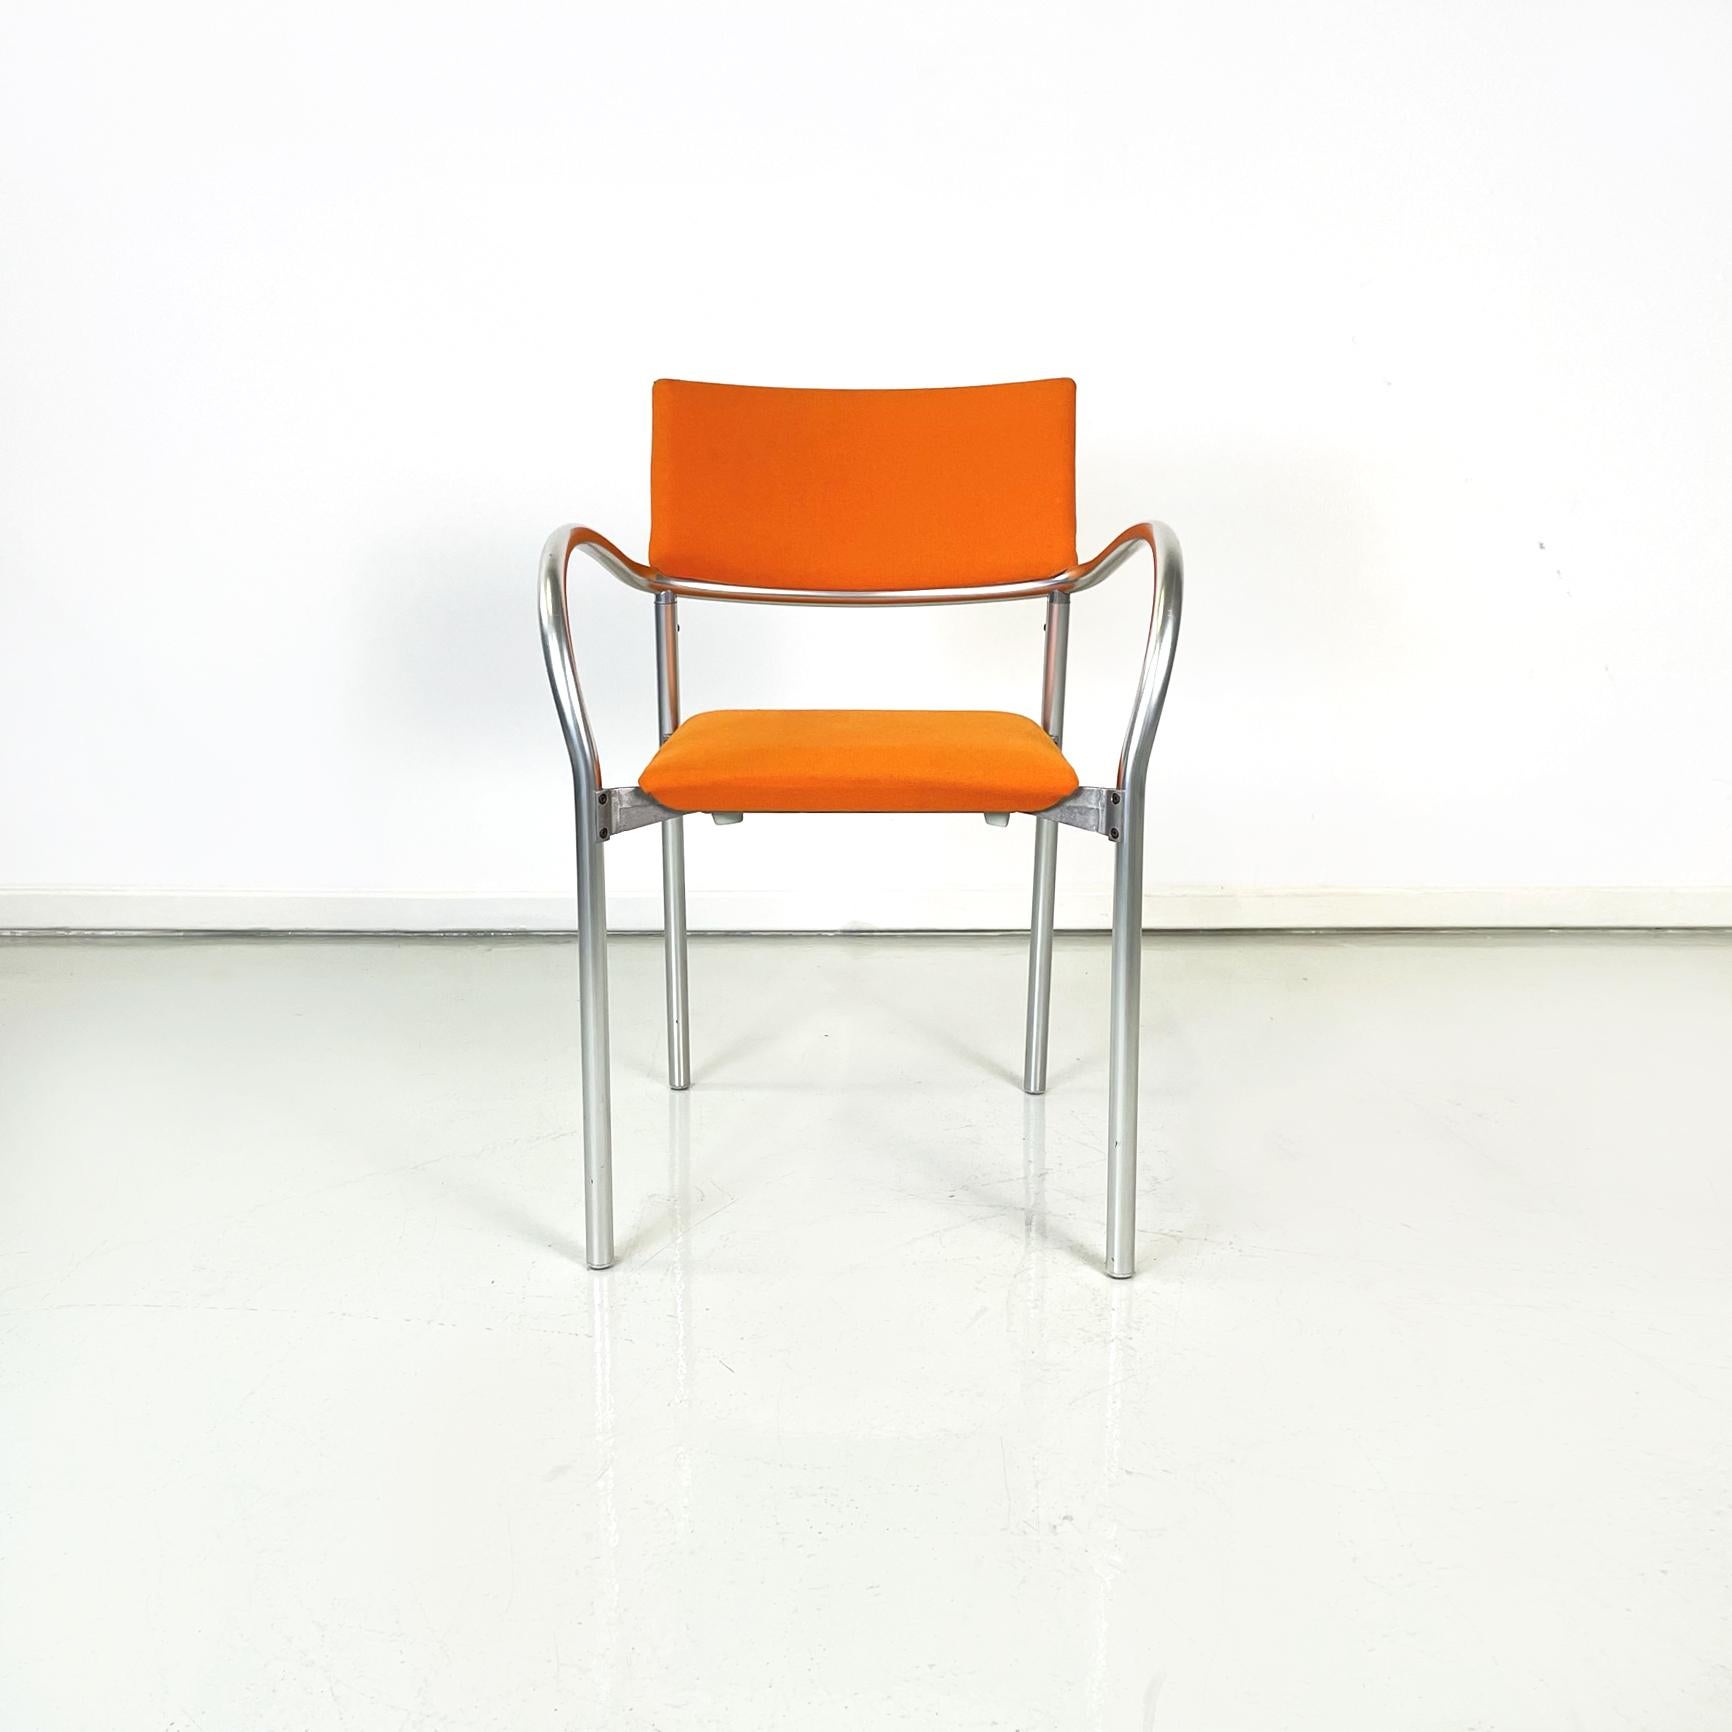 Italian Modern Orange Fabric Chairs Mod, Breeze by Bartoli for Segis, 1980s In Good Condition For Sale In MIlano, IT